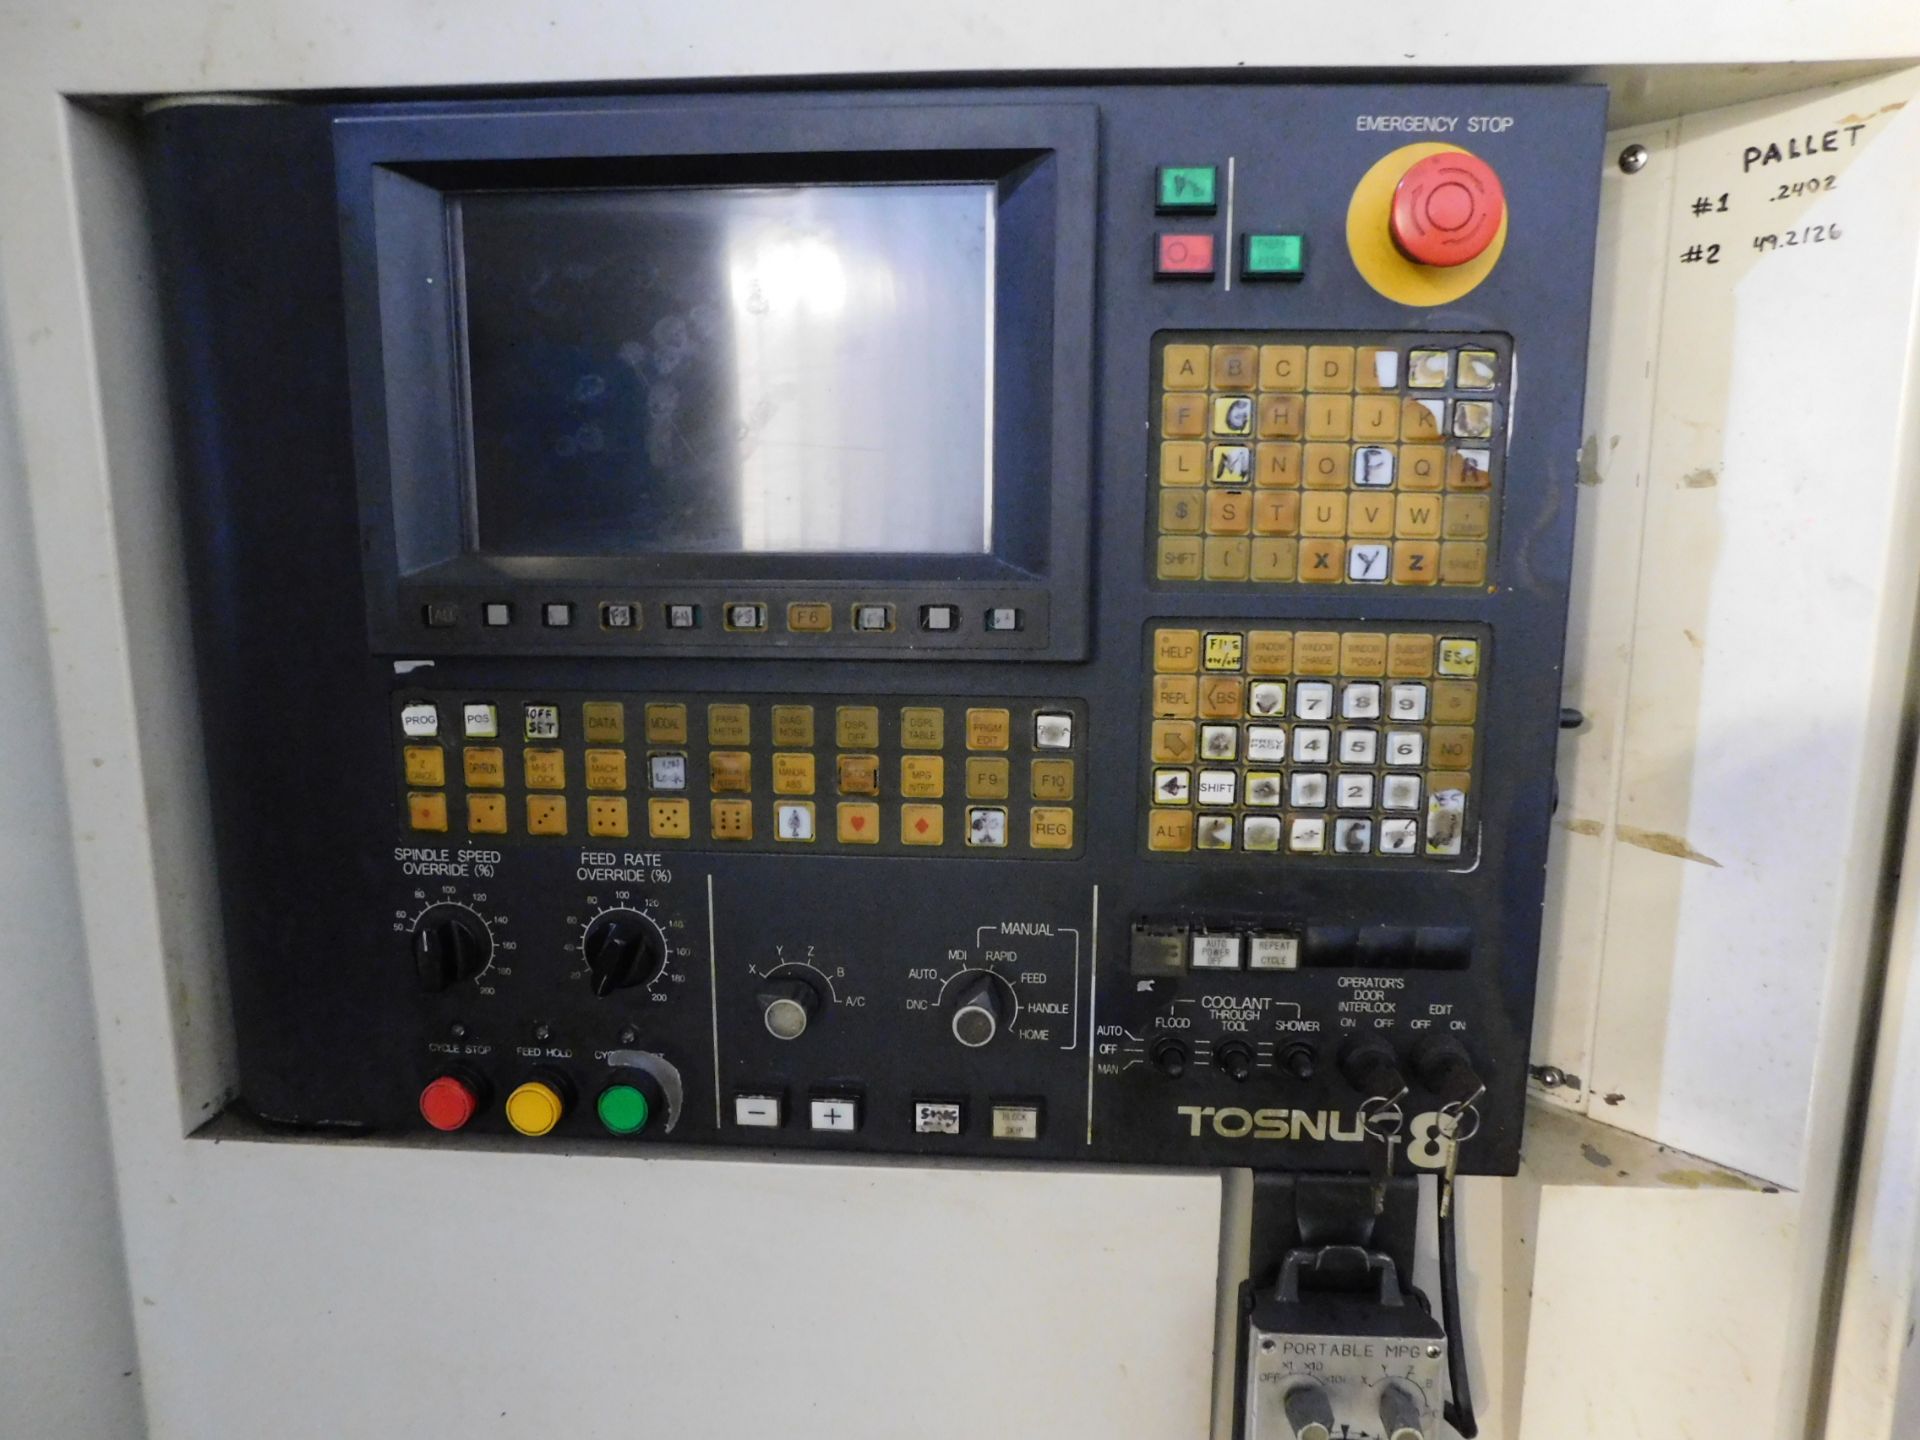 Toshiba Model BMC-800 CNC Horizontal Machining Center, s/n 212601, New 1995, Tosnuc 888 CNC Control, - Image 4 of 14